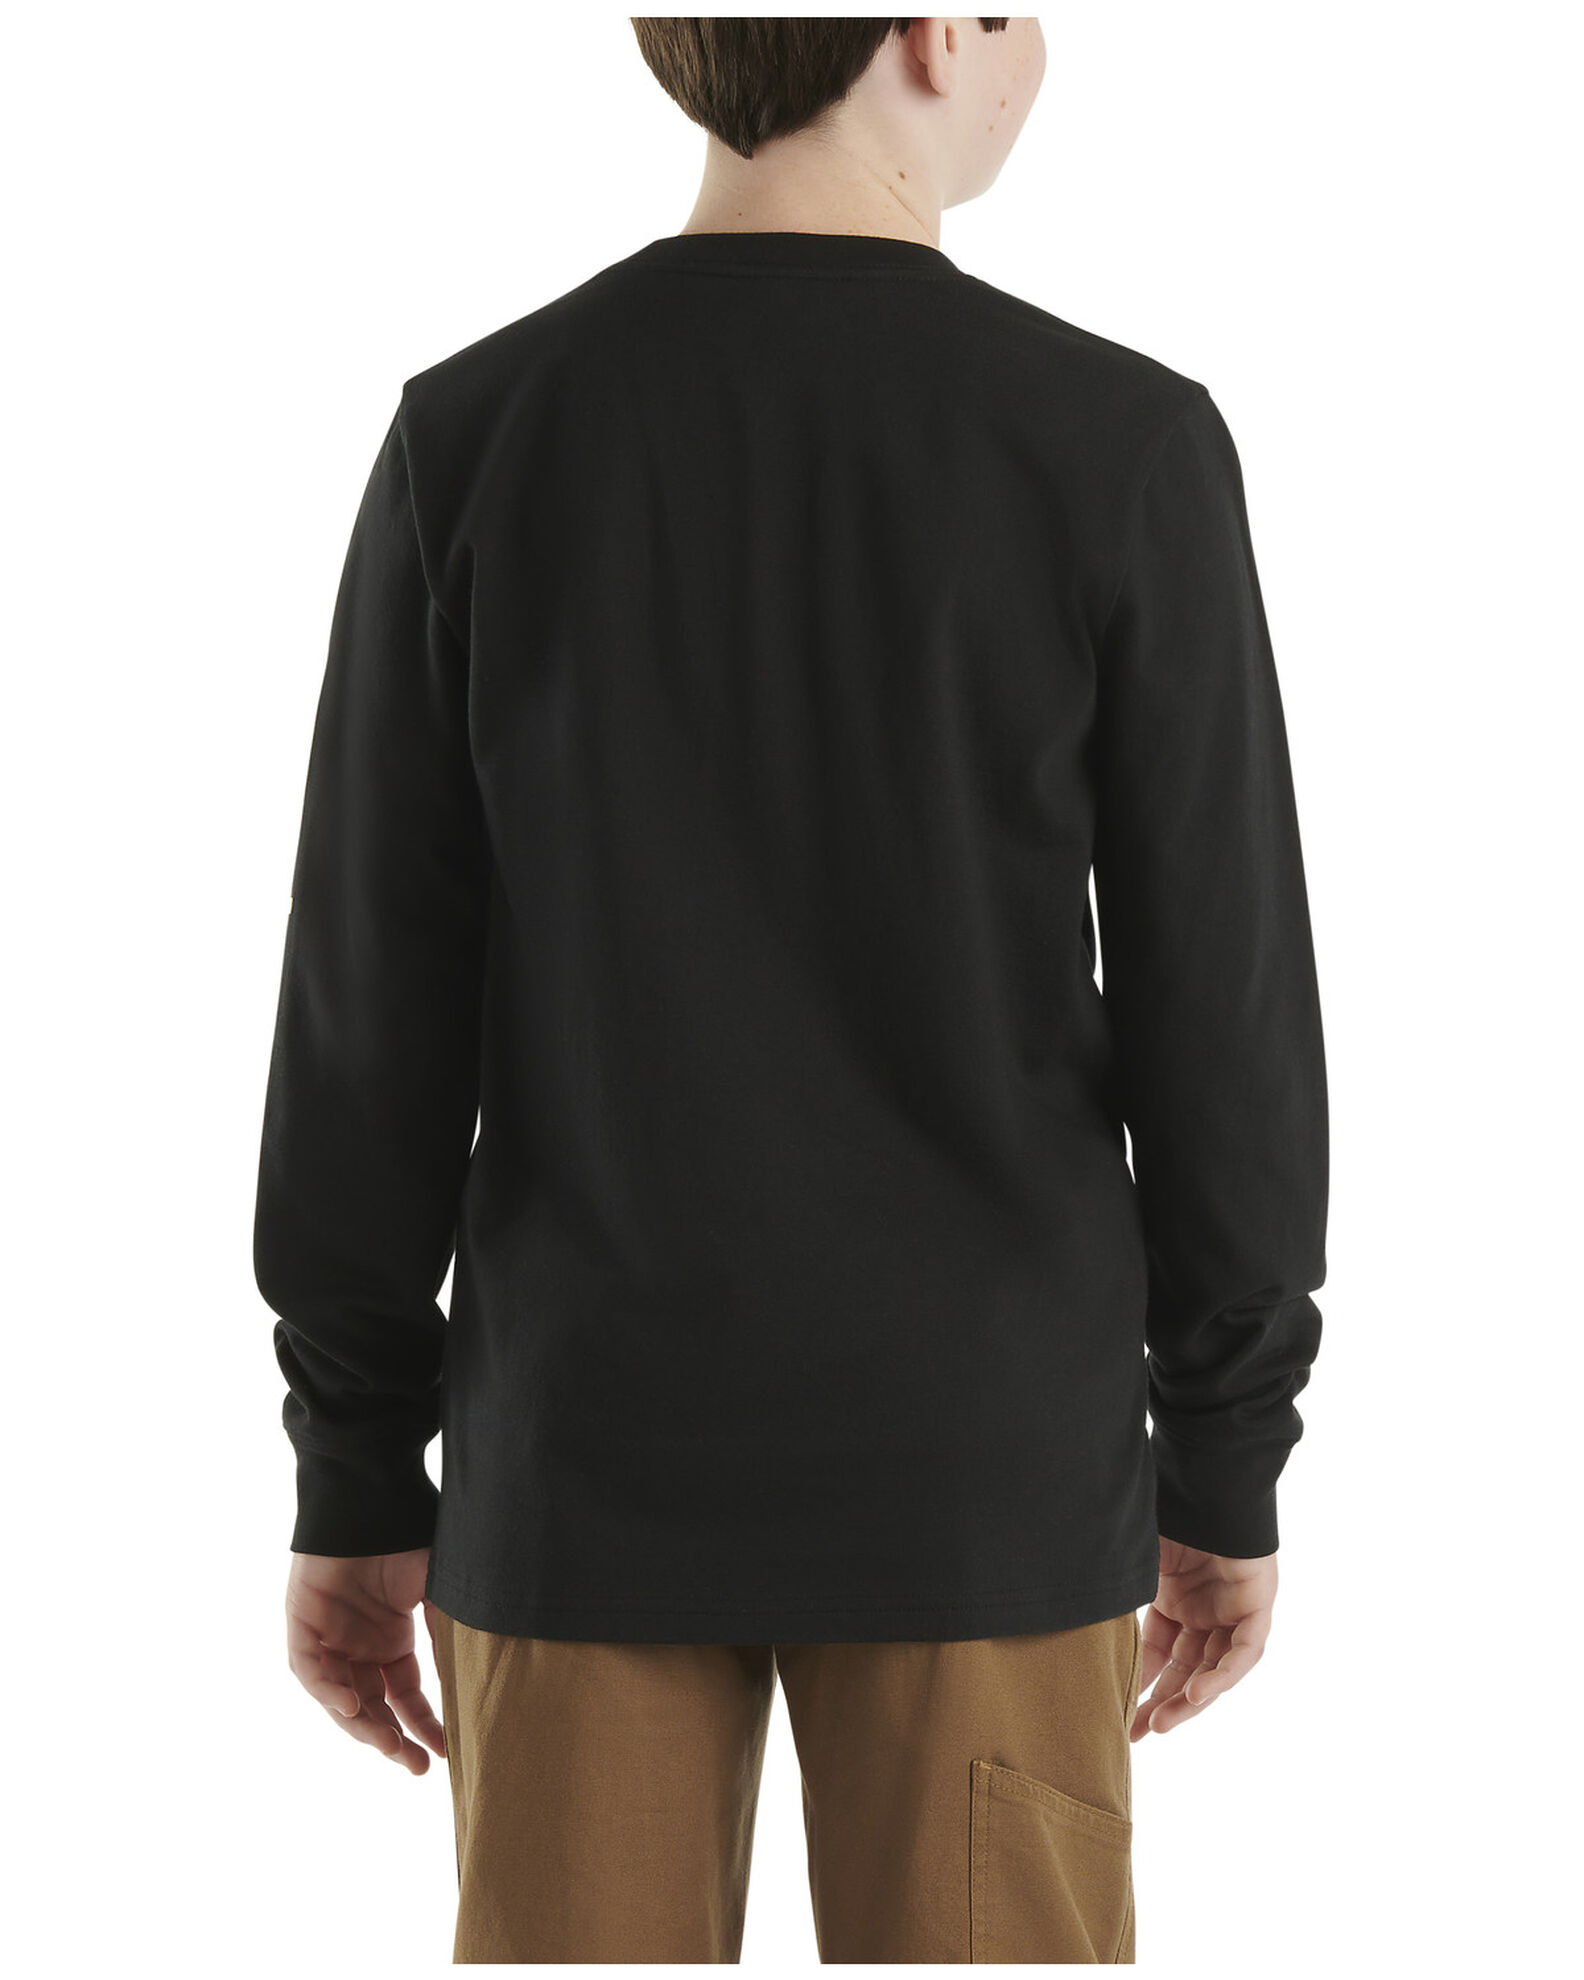 Carhartt Boys' Logo Pocket Long Sleeve T-Shirt